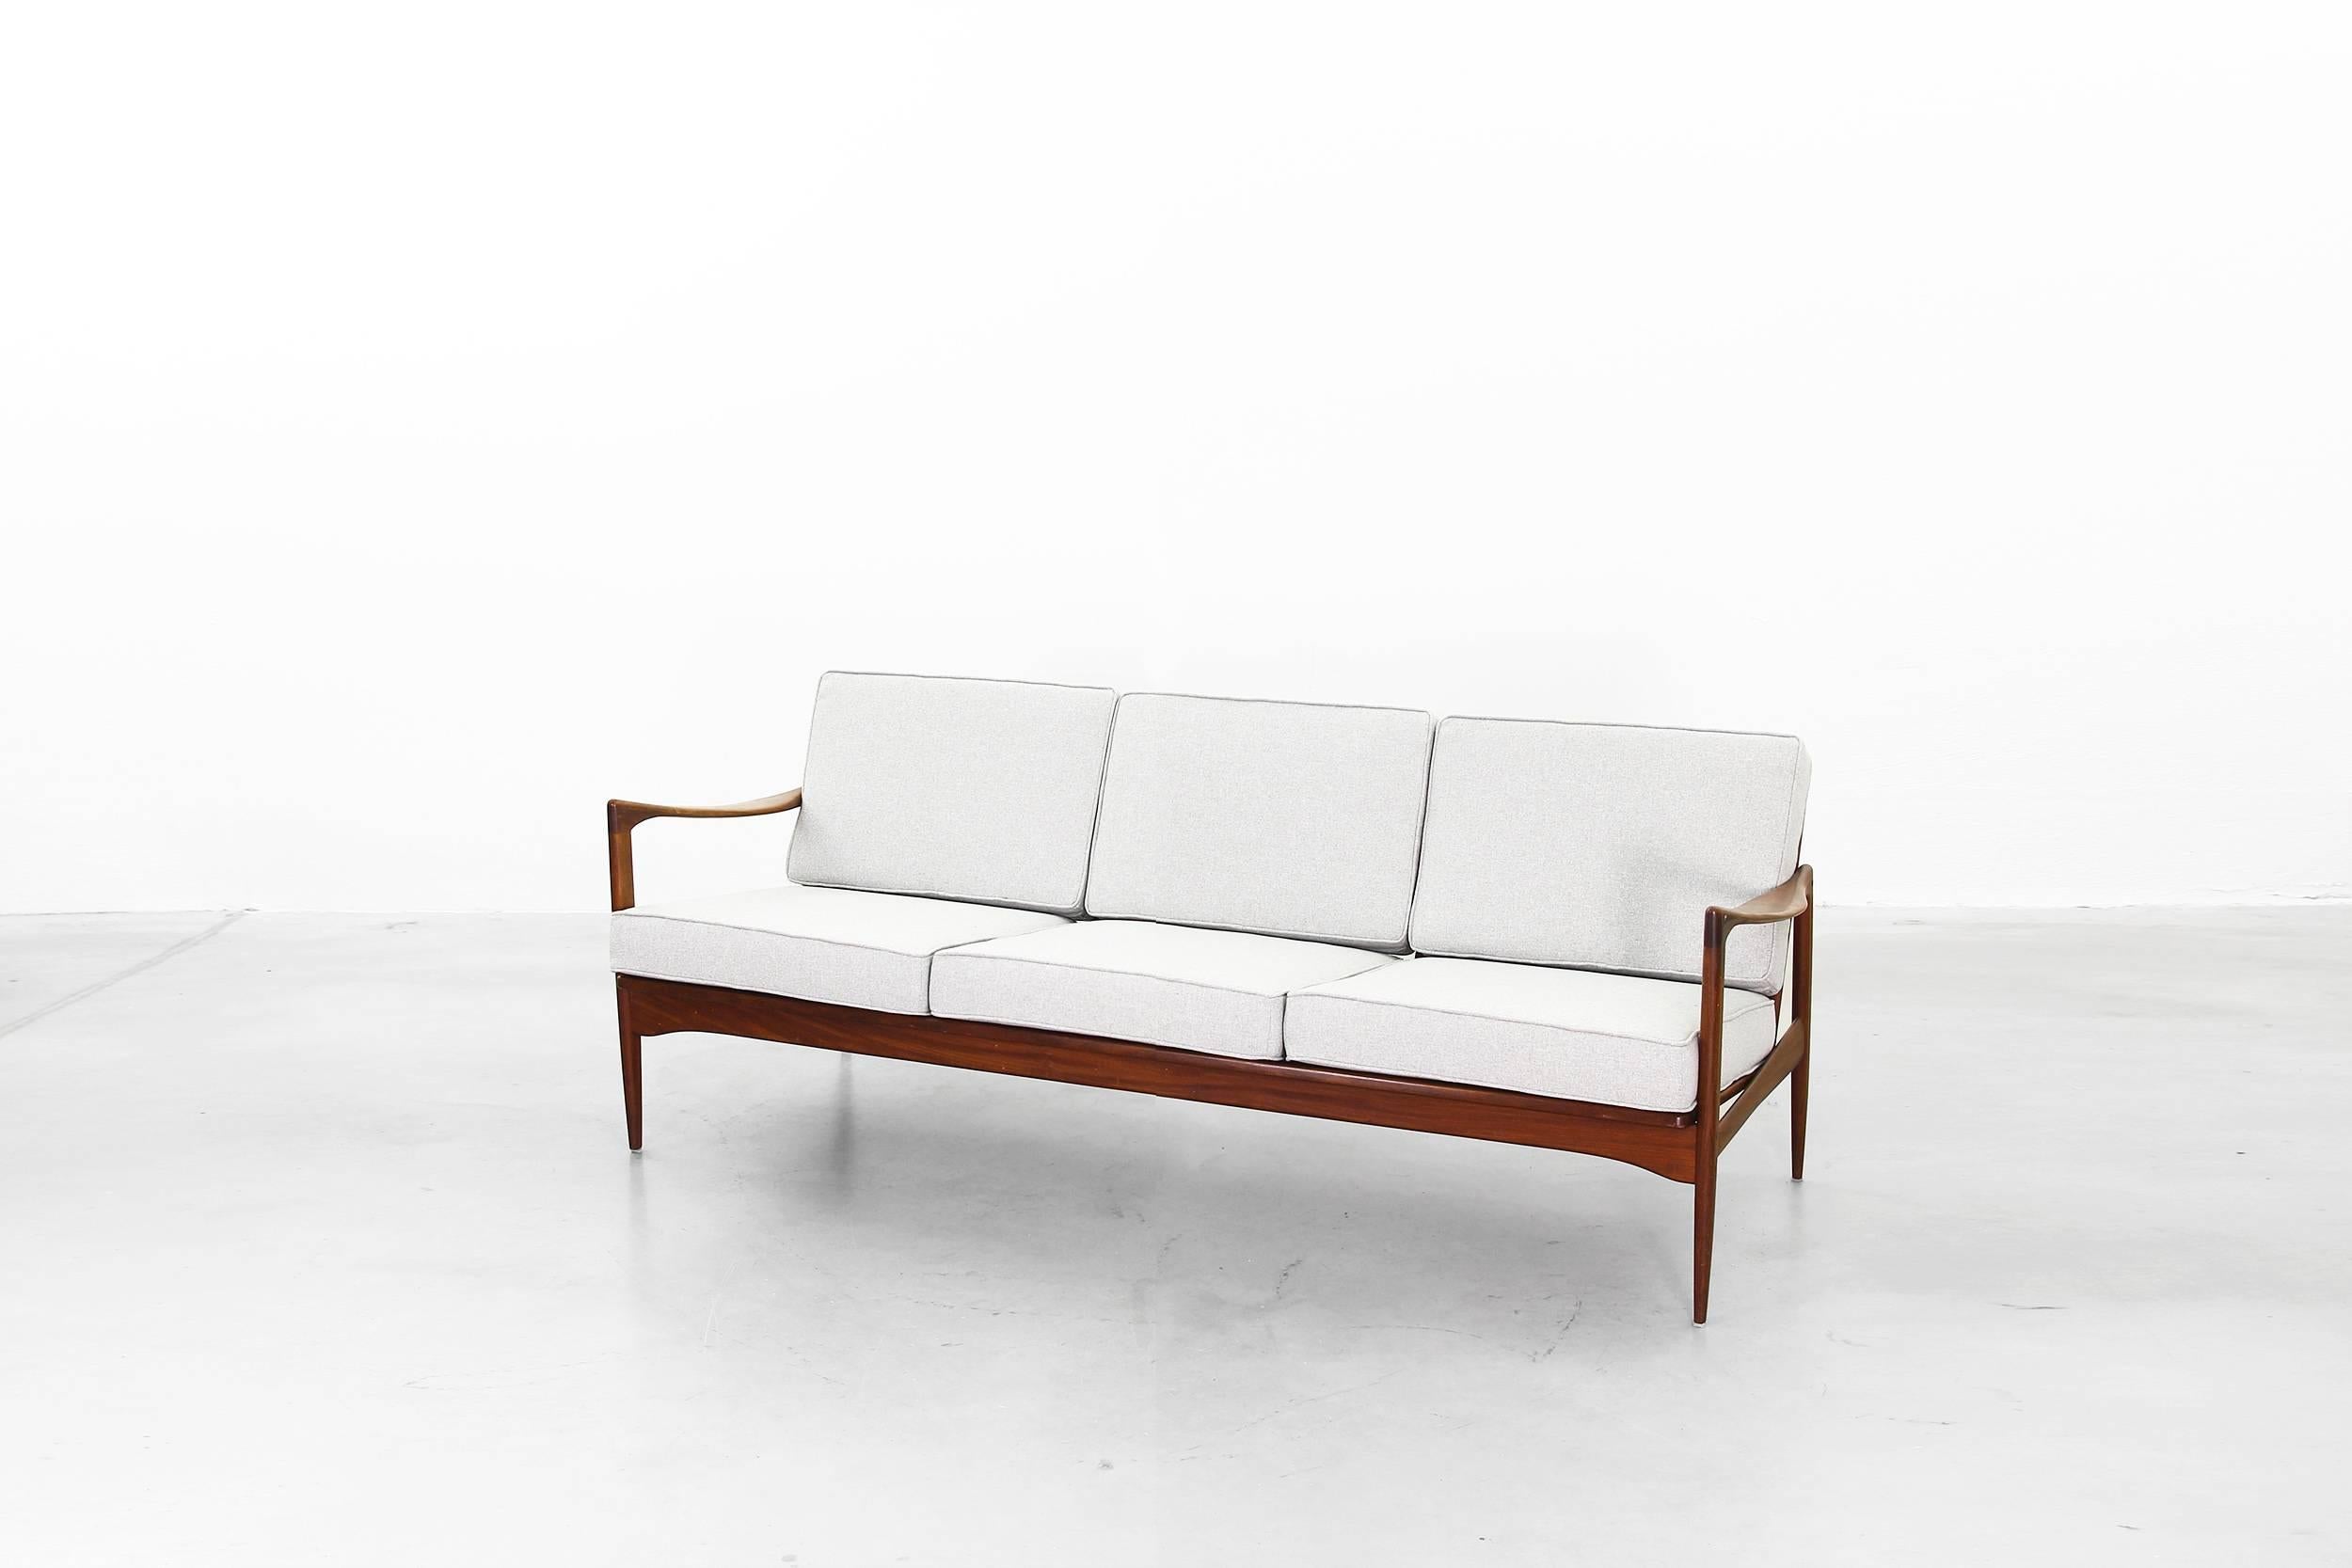 20th Century Rare Sofa Model Kandidaten Designed by Ib Kofod-Larsen for Ope Mobler